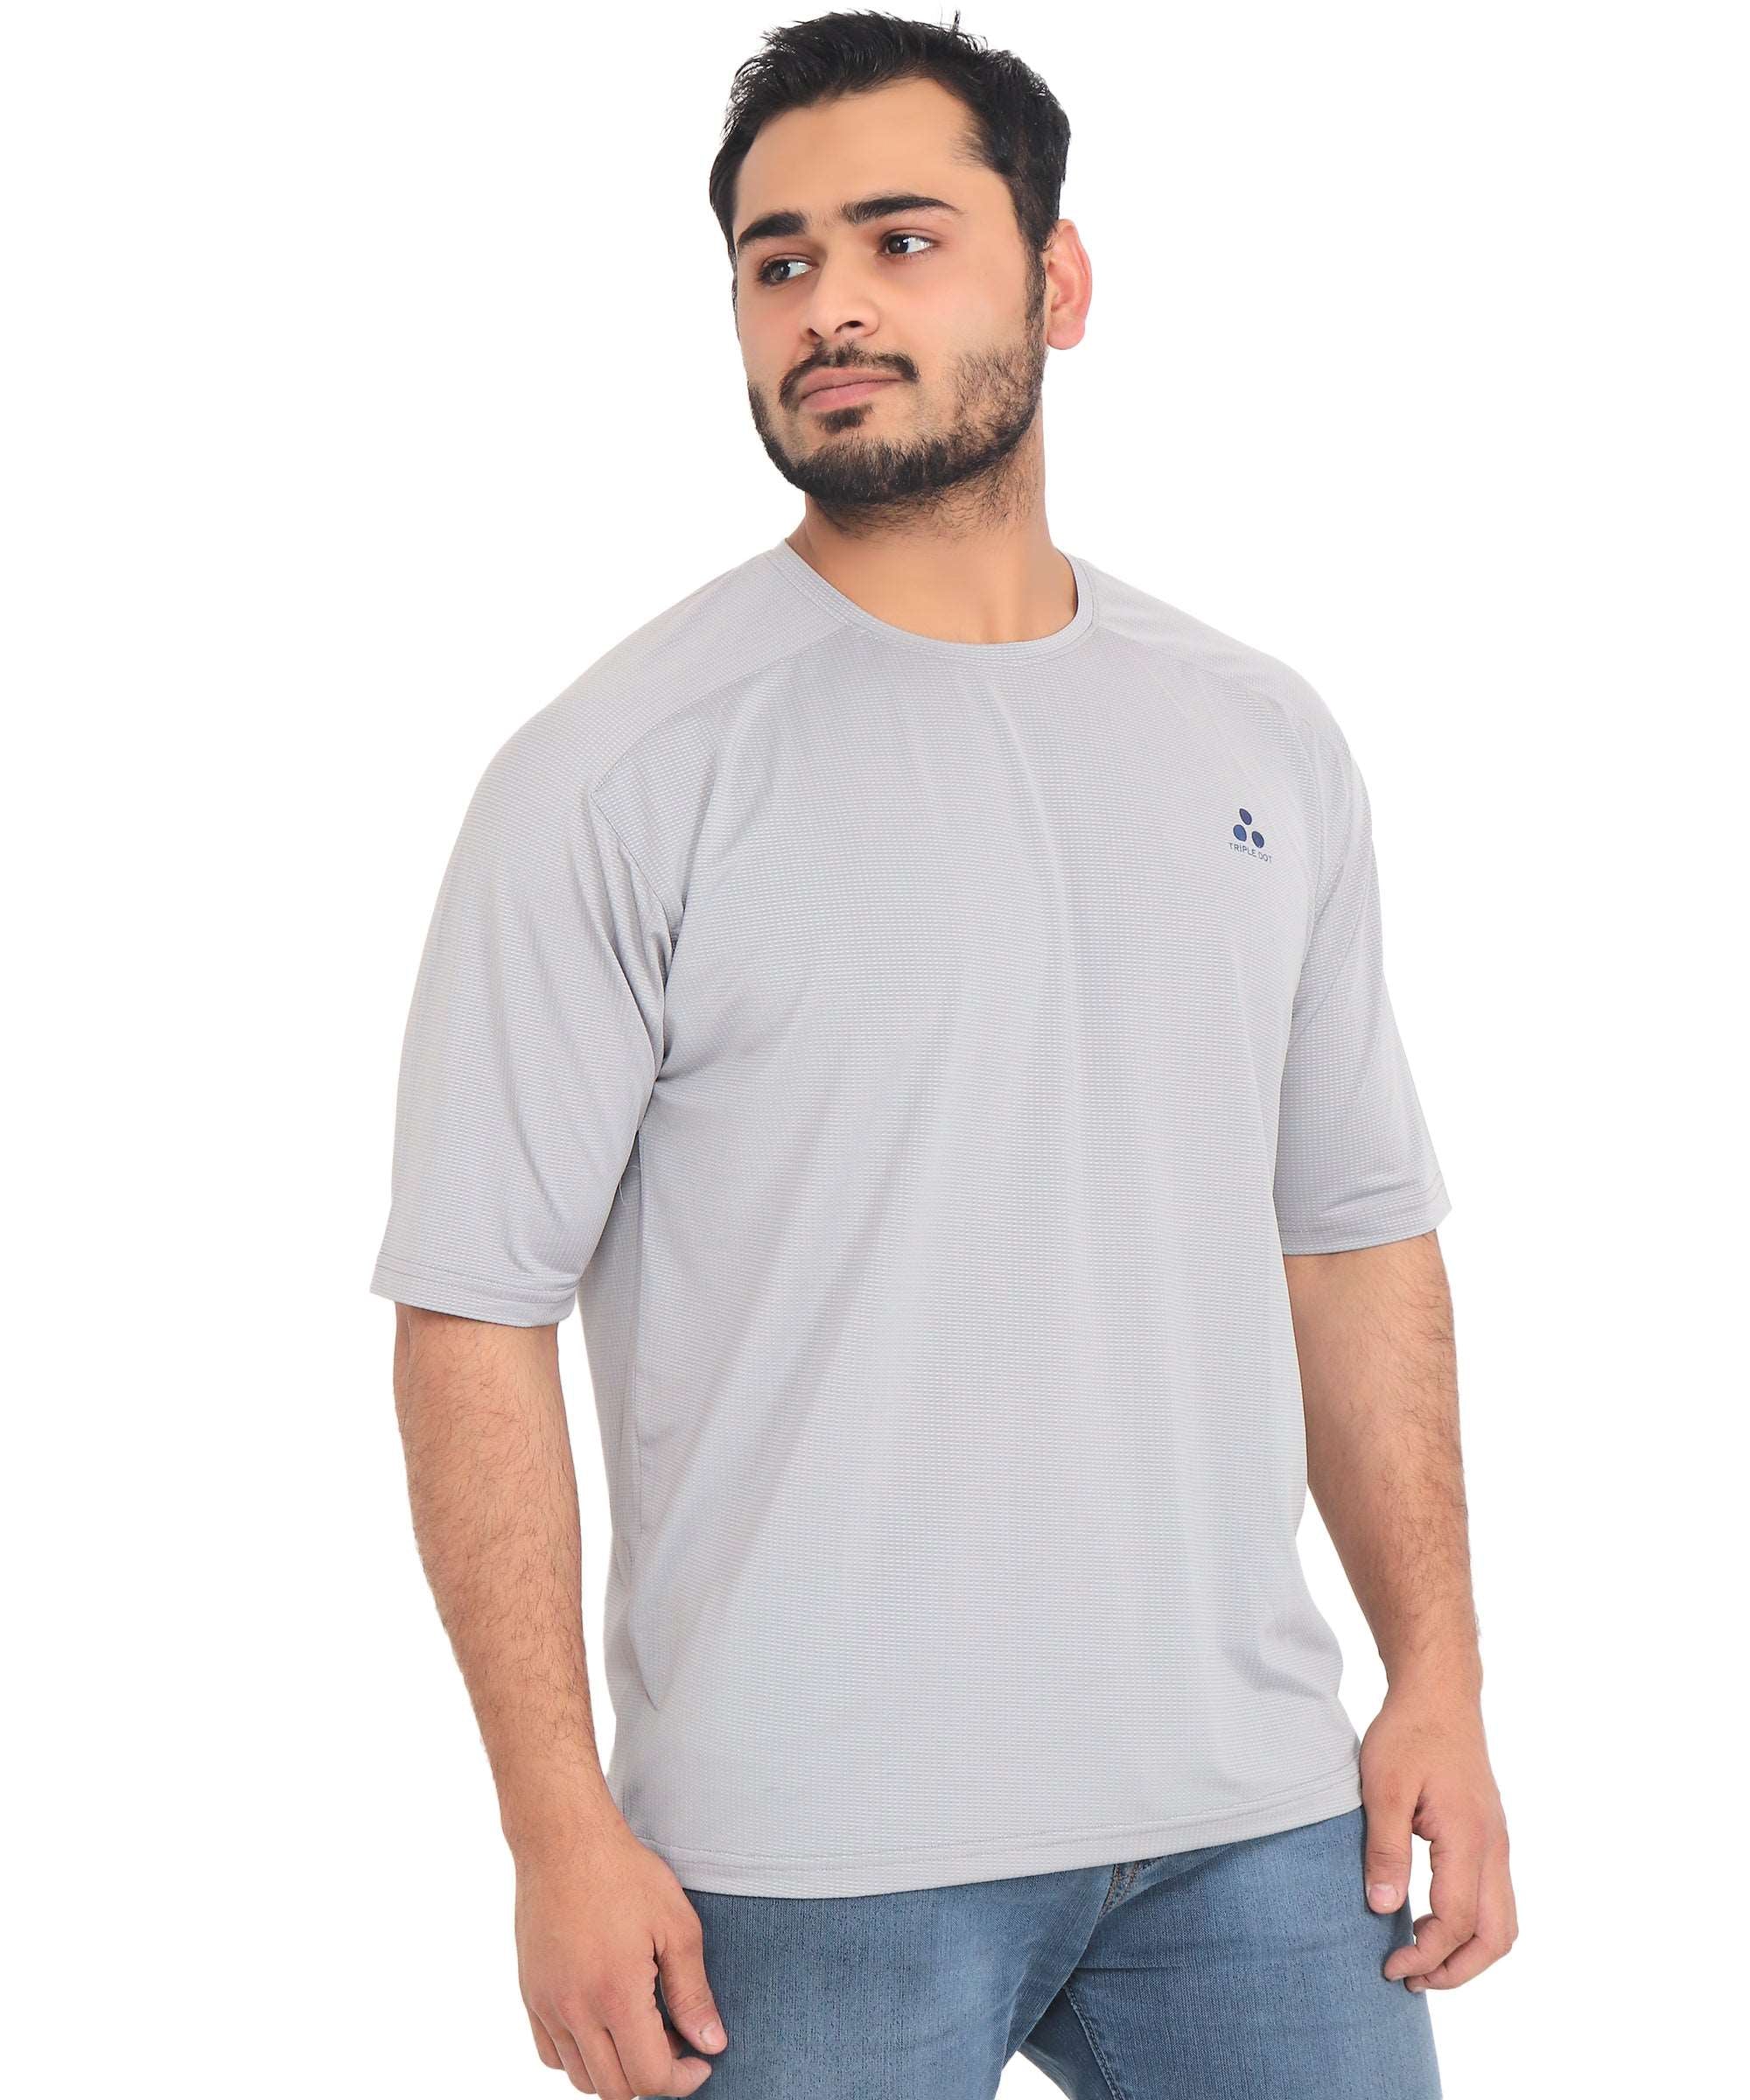 Drop Shoulder Dri Fit Gym wear t-shirts for Men | Triple Dot Clothings